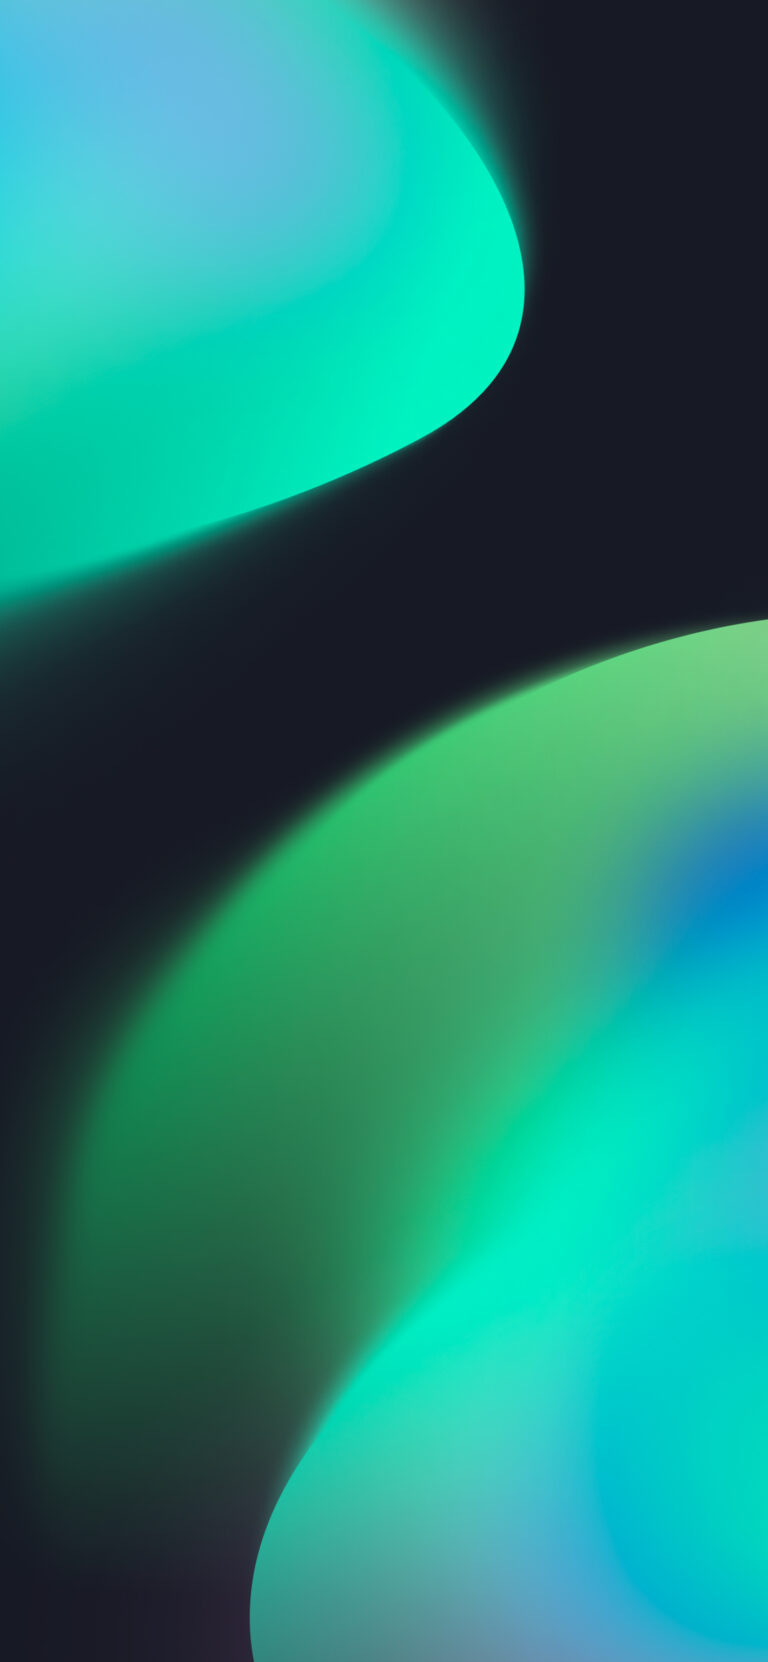 iOS 16 - Concept Wallpaper (Green - Dark) - Wallpapers Central